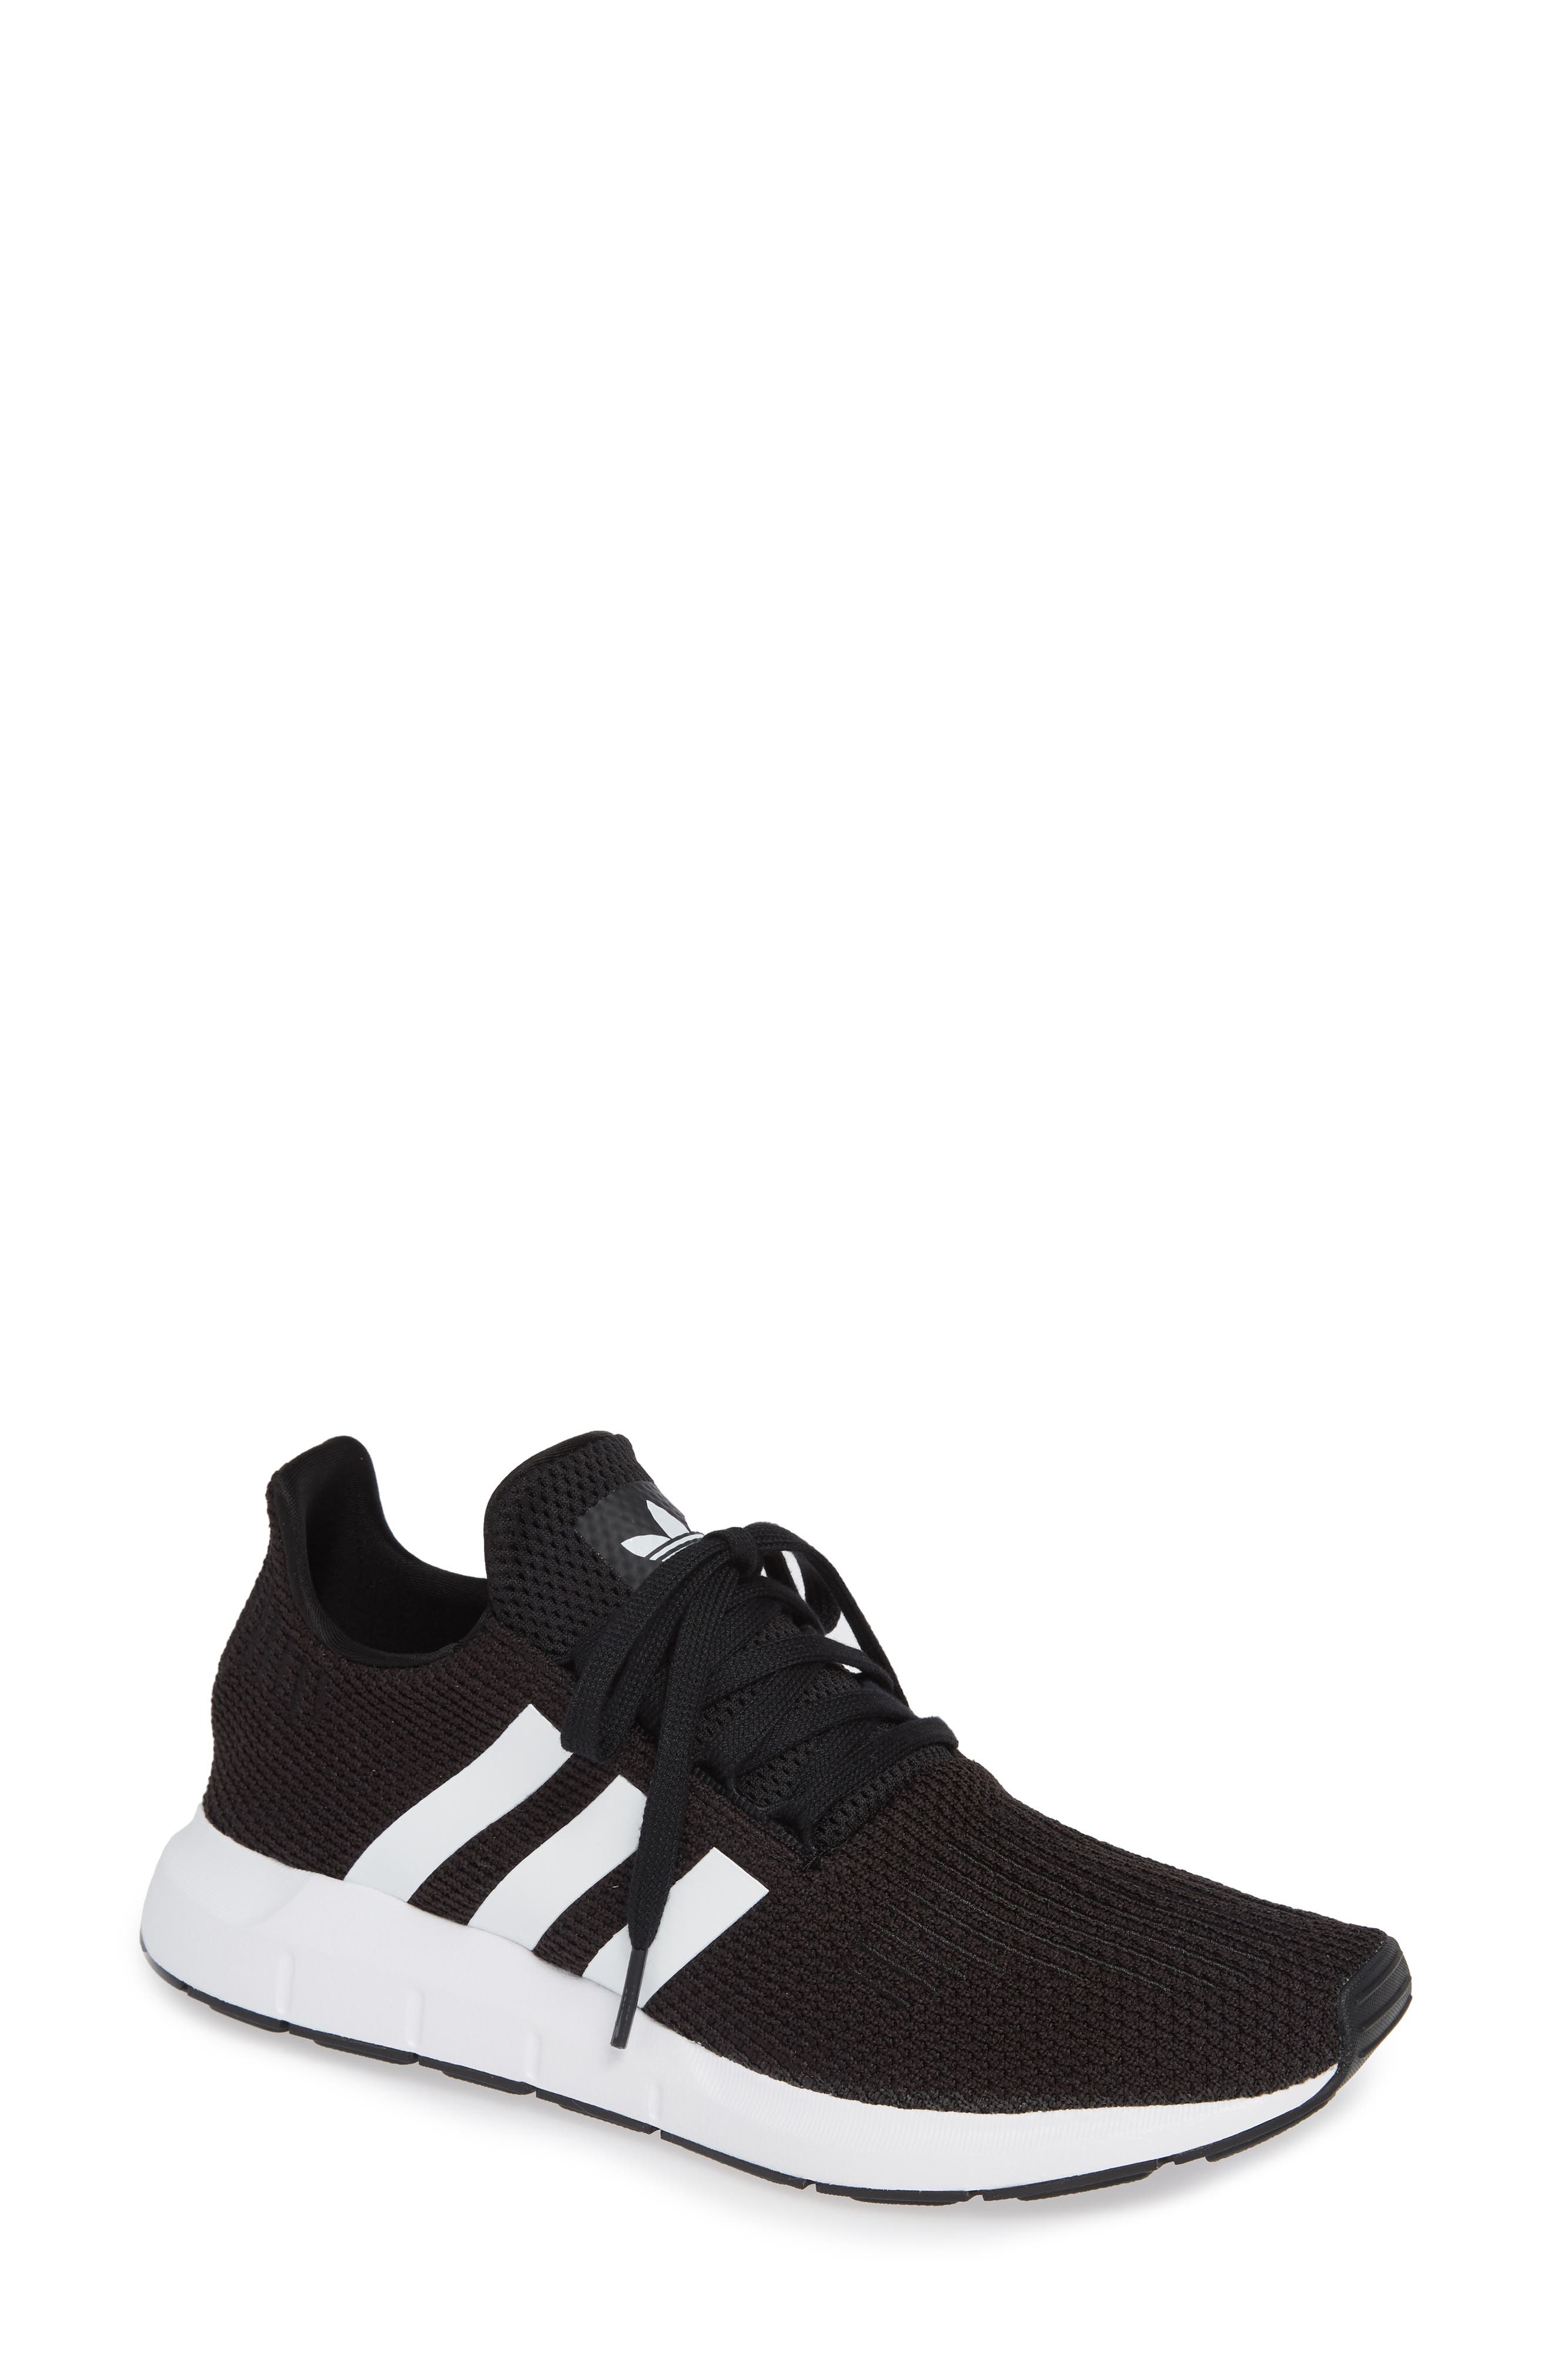 adidas black swift run shoes